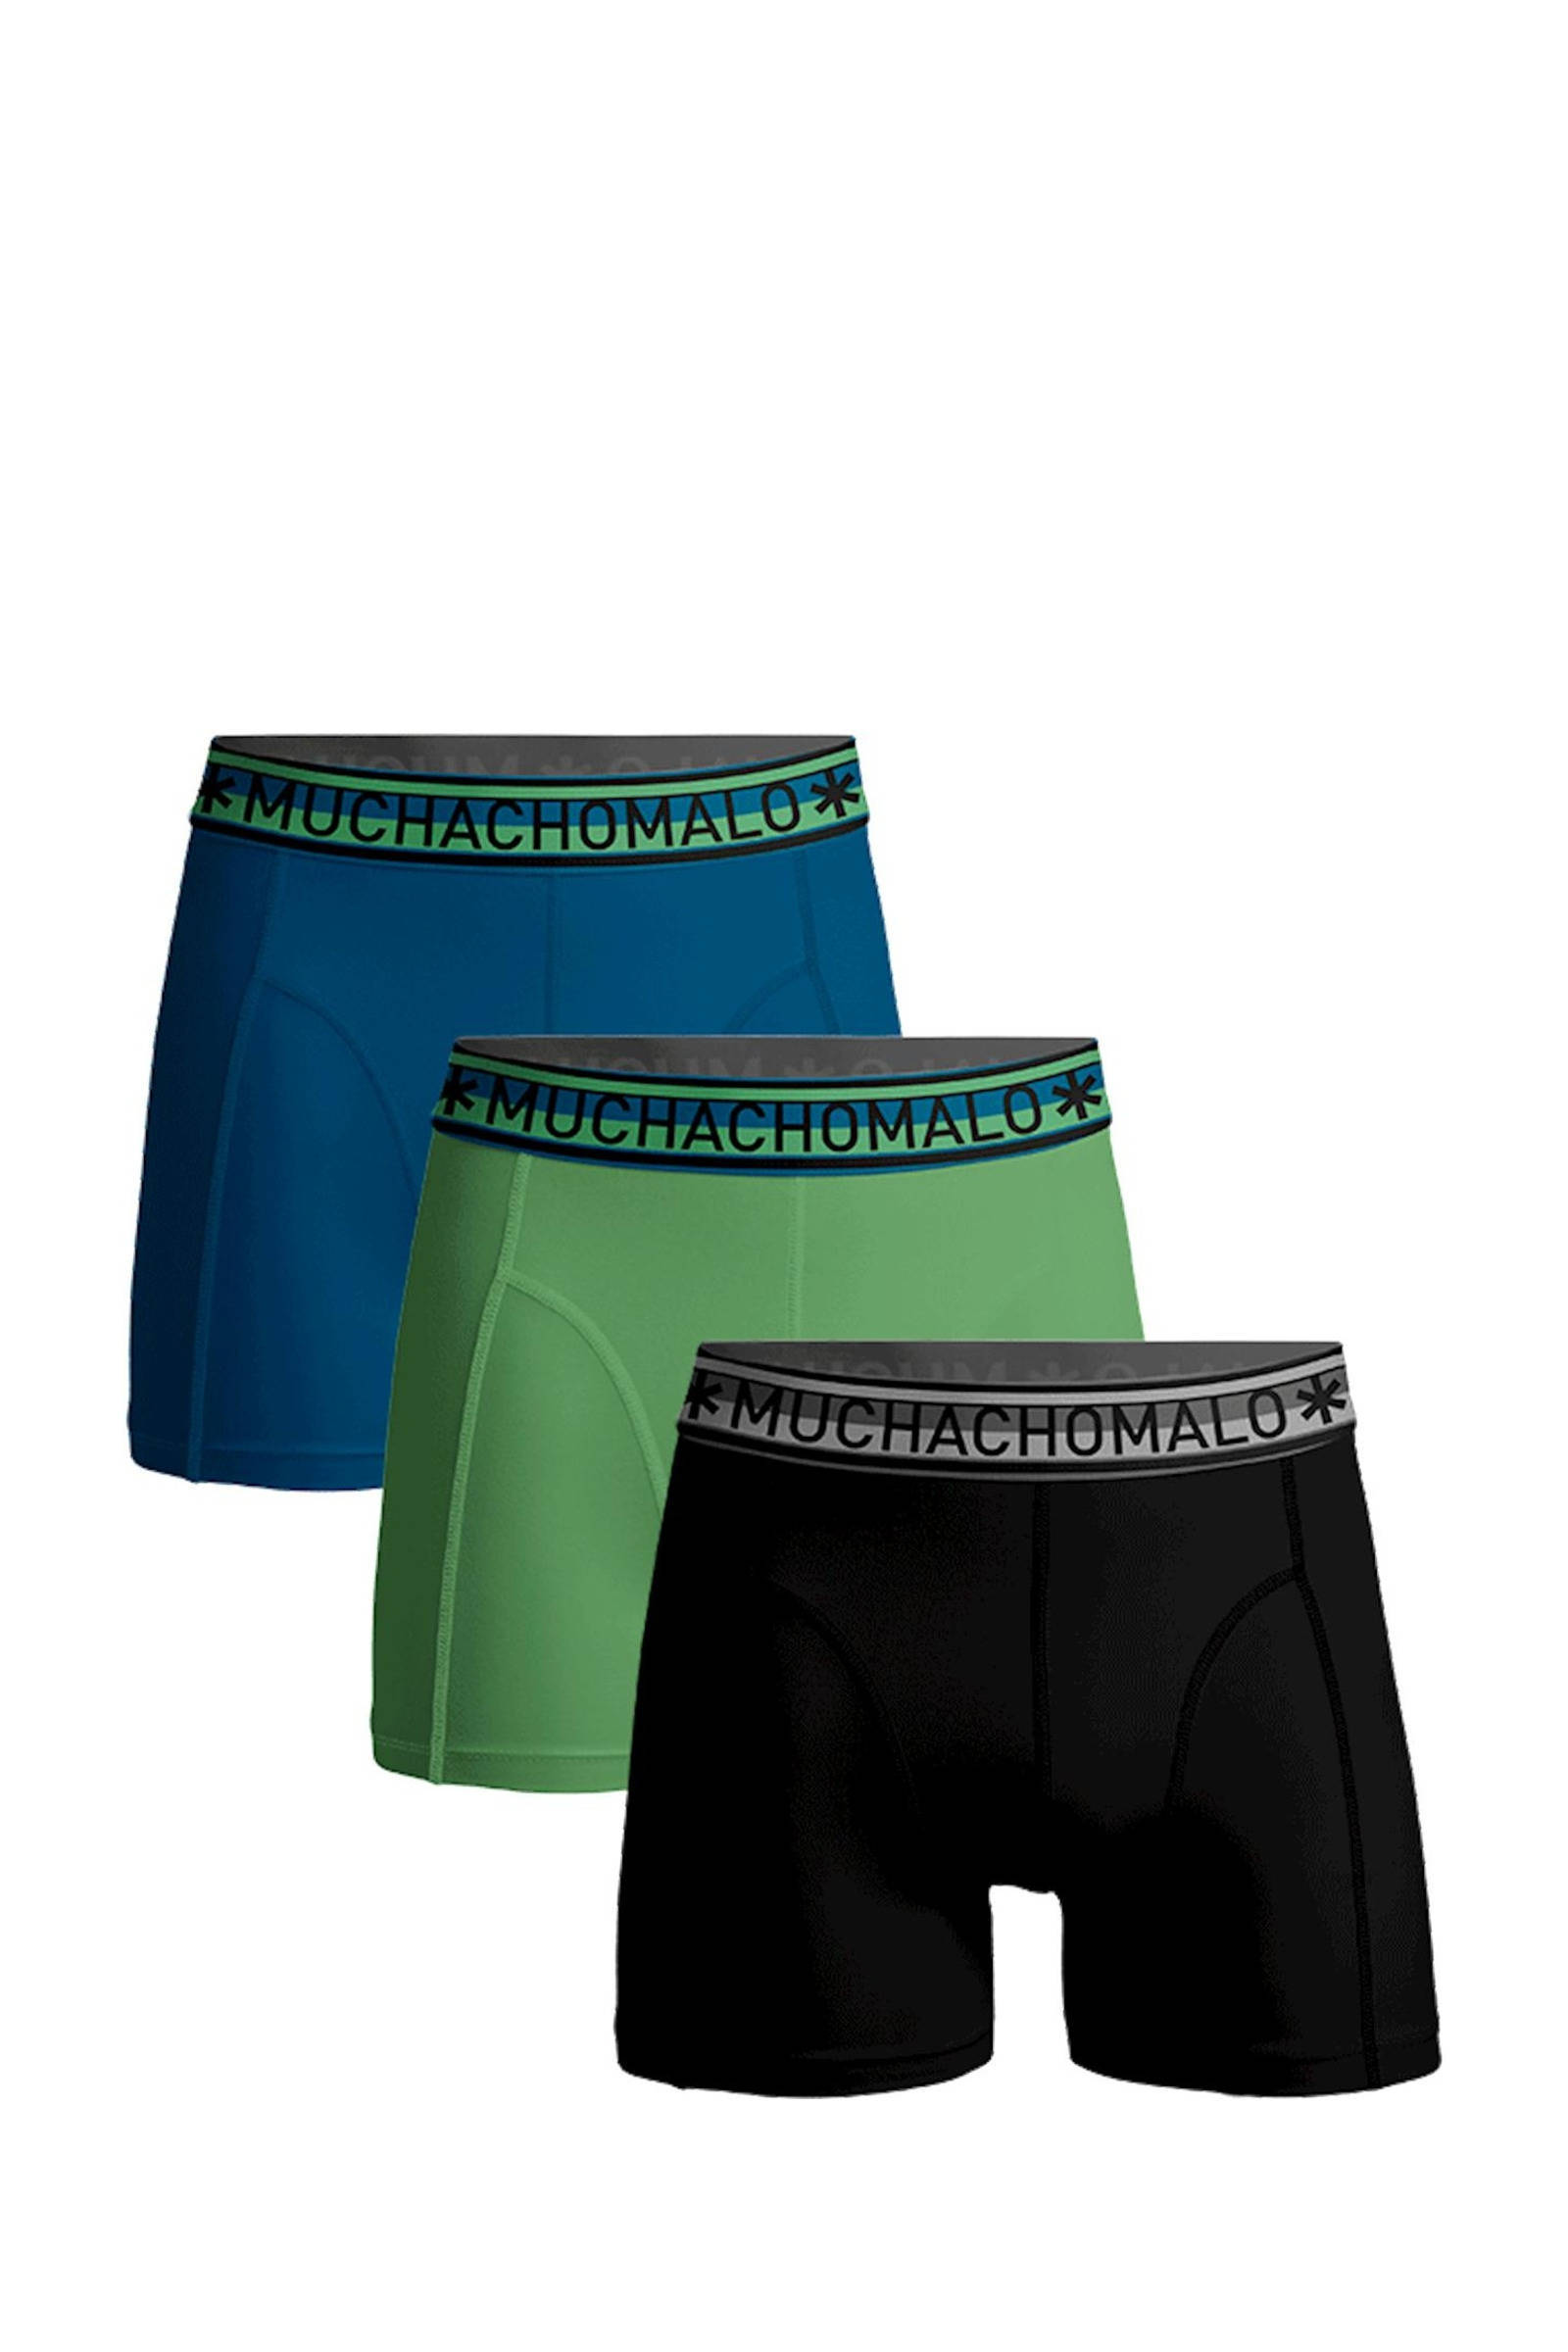 Muchachomalo boxershort Solid set van 3 blauw/lichtgroen/zwart online kopen